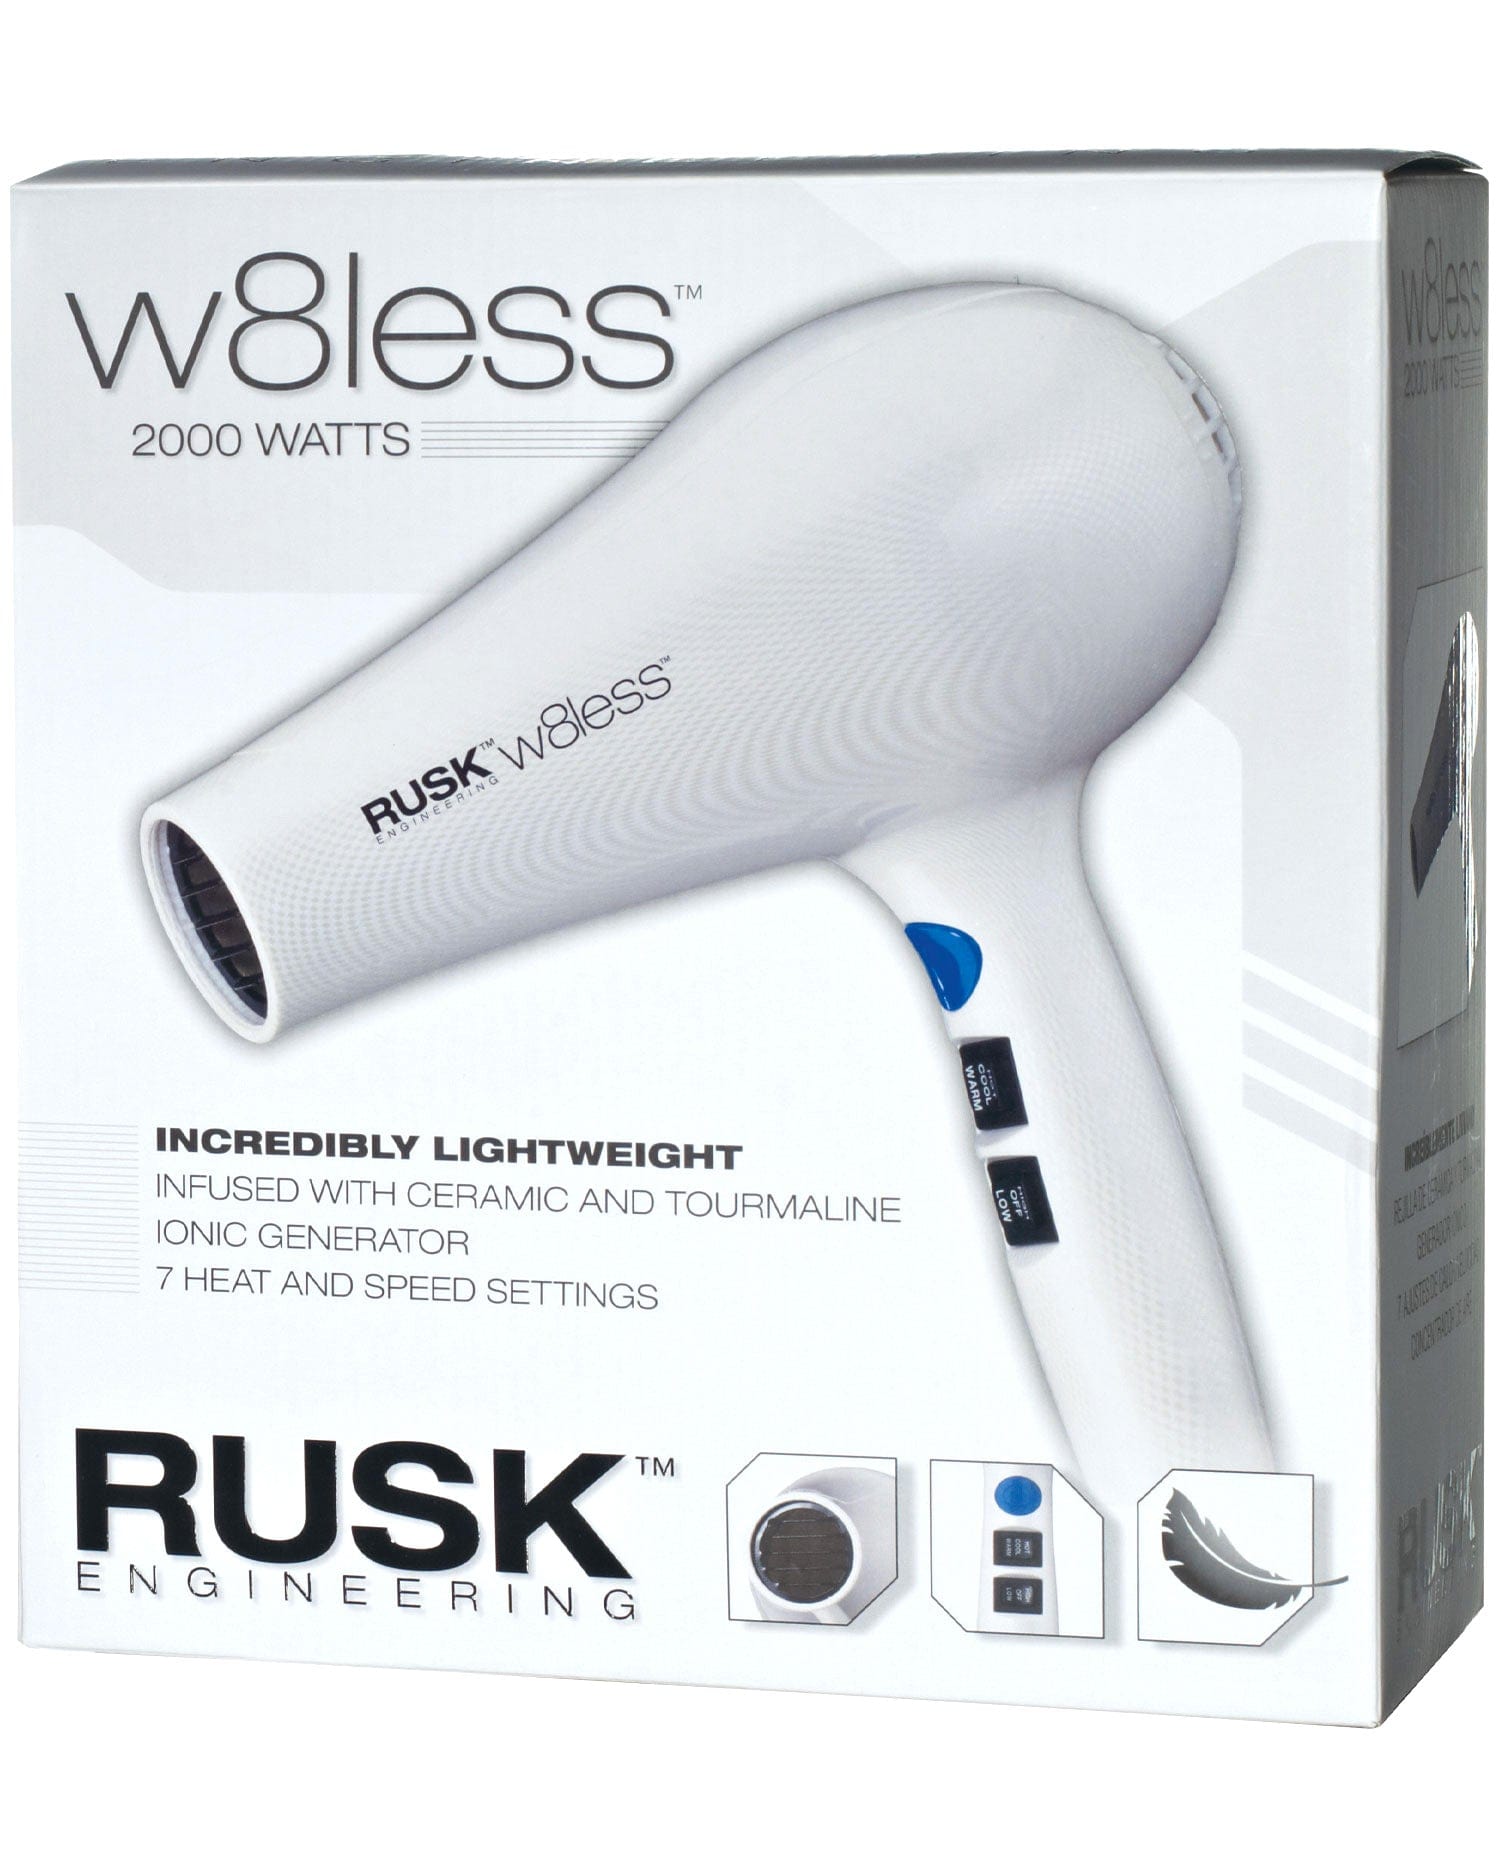 RUSK - w8less Professional 2000 Watt Hair Dryer 